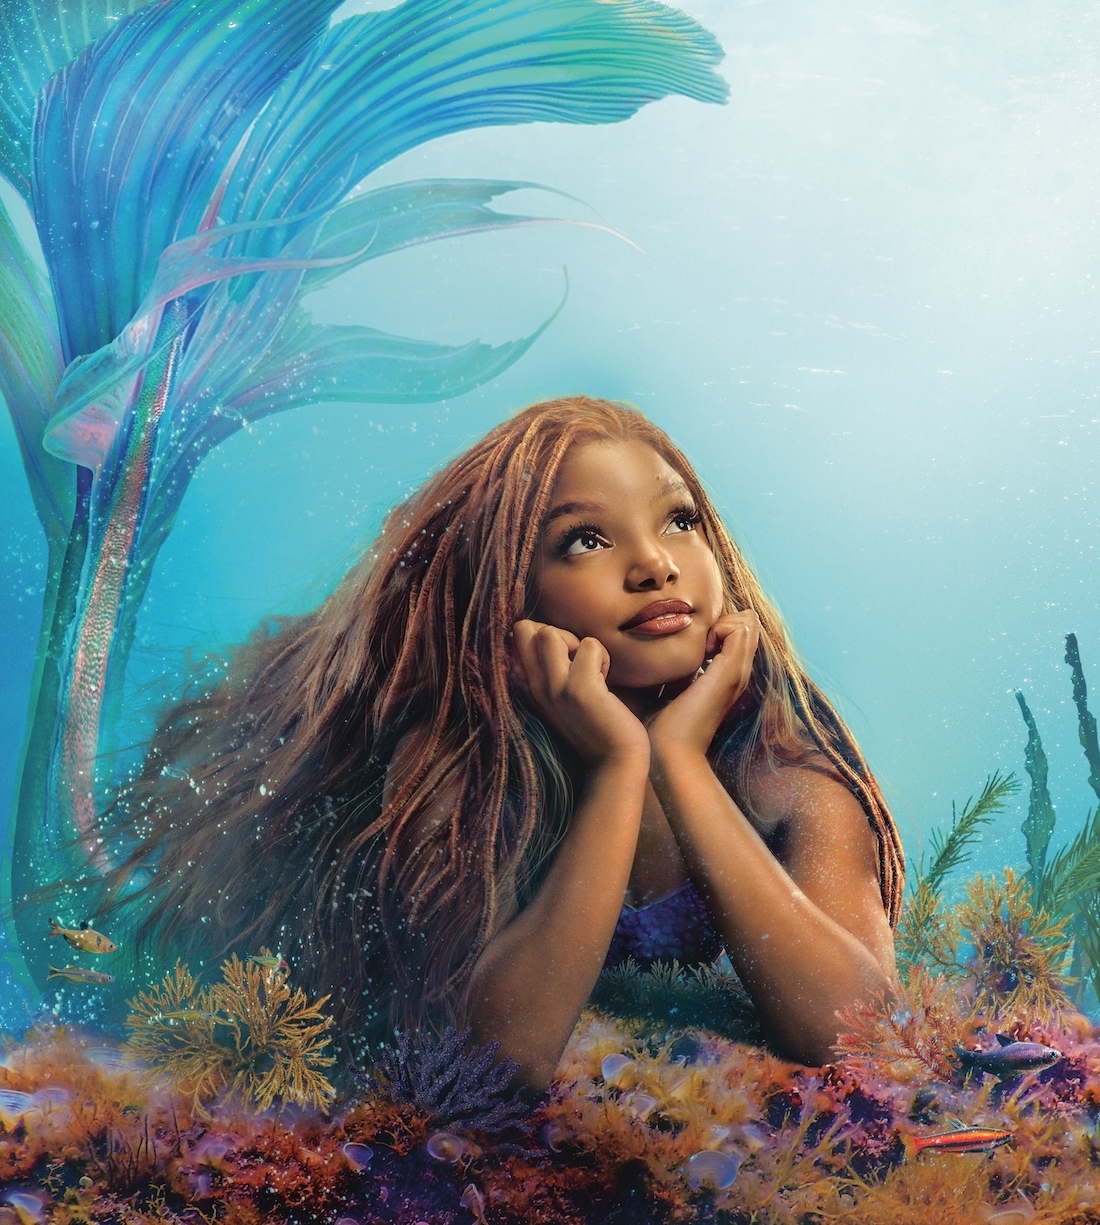 DISNEY STORE PARKS Oh My Disney Ariel Leggings The Little Mermaid